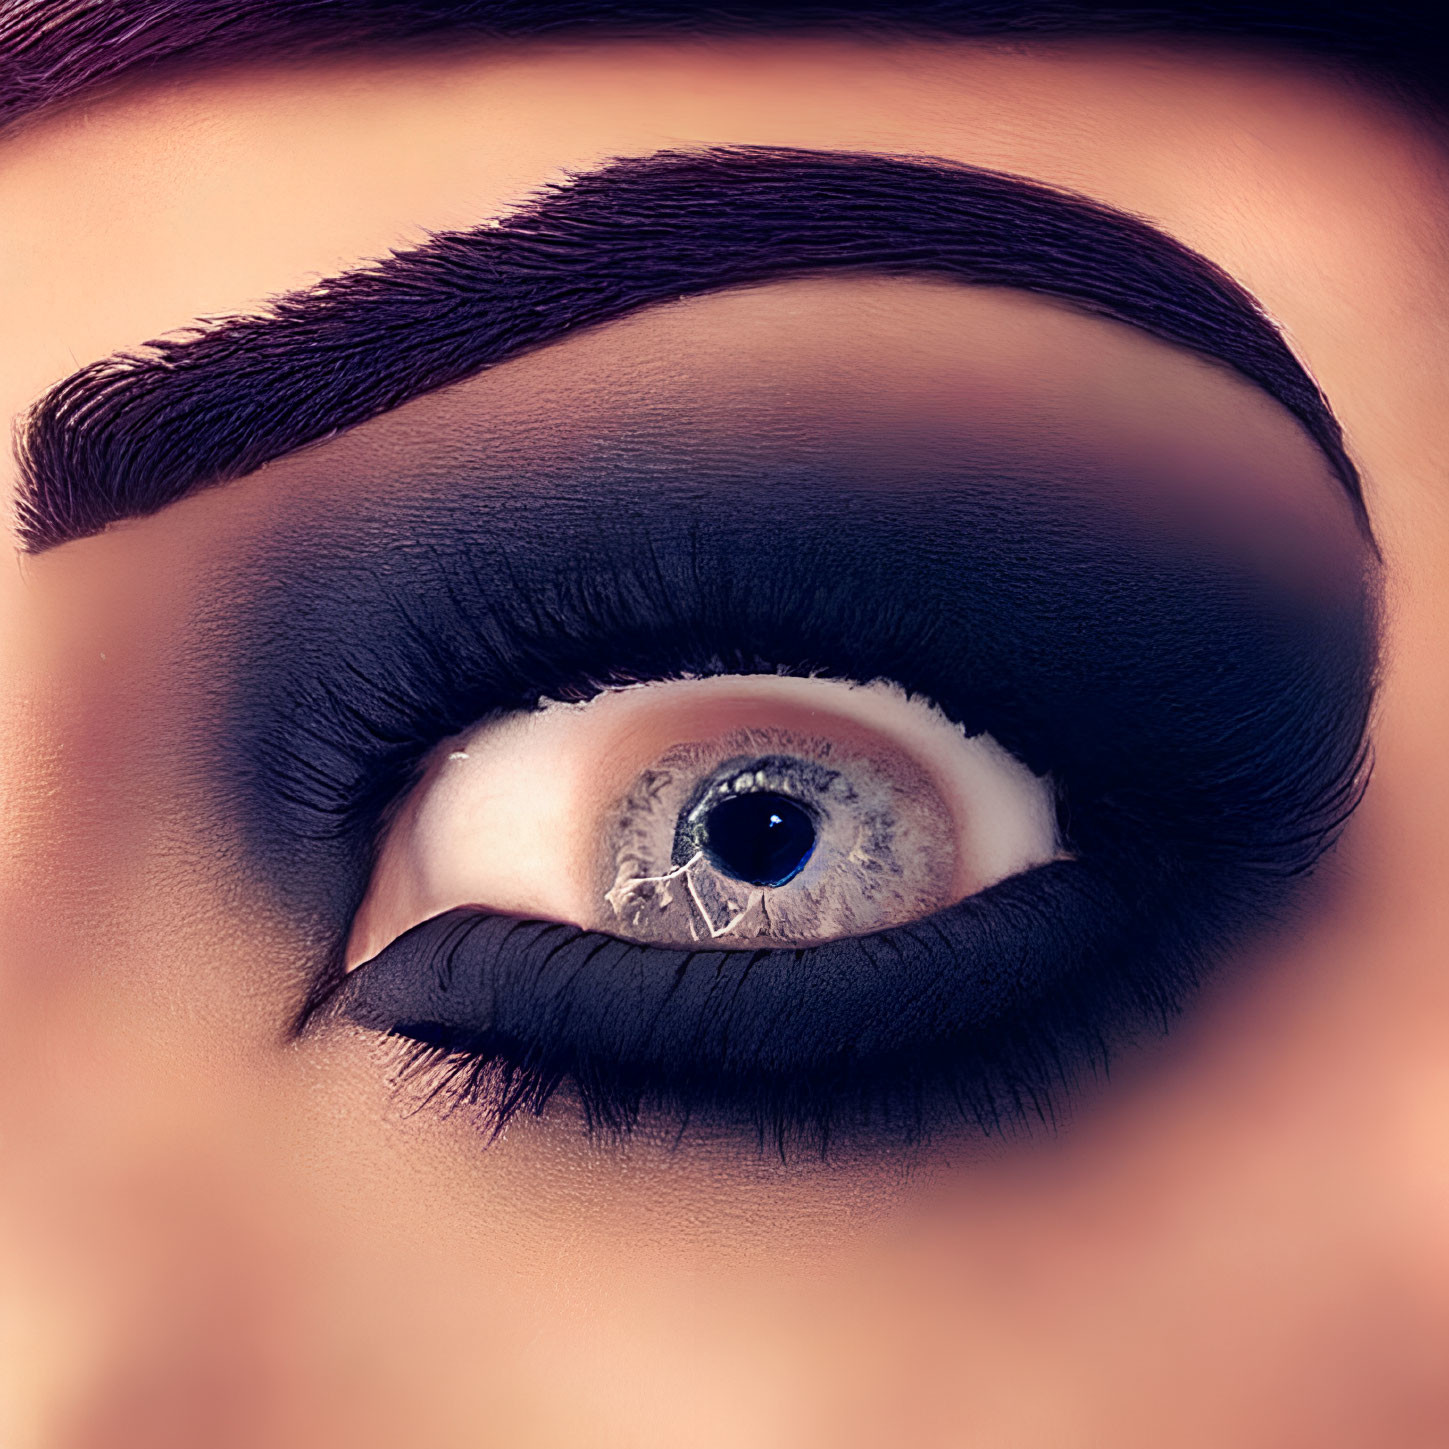 Detailed Close-Up of Human Eye with Dramatic Smokey Eye Makeup